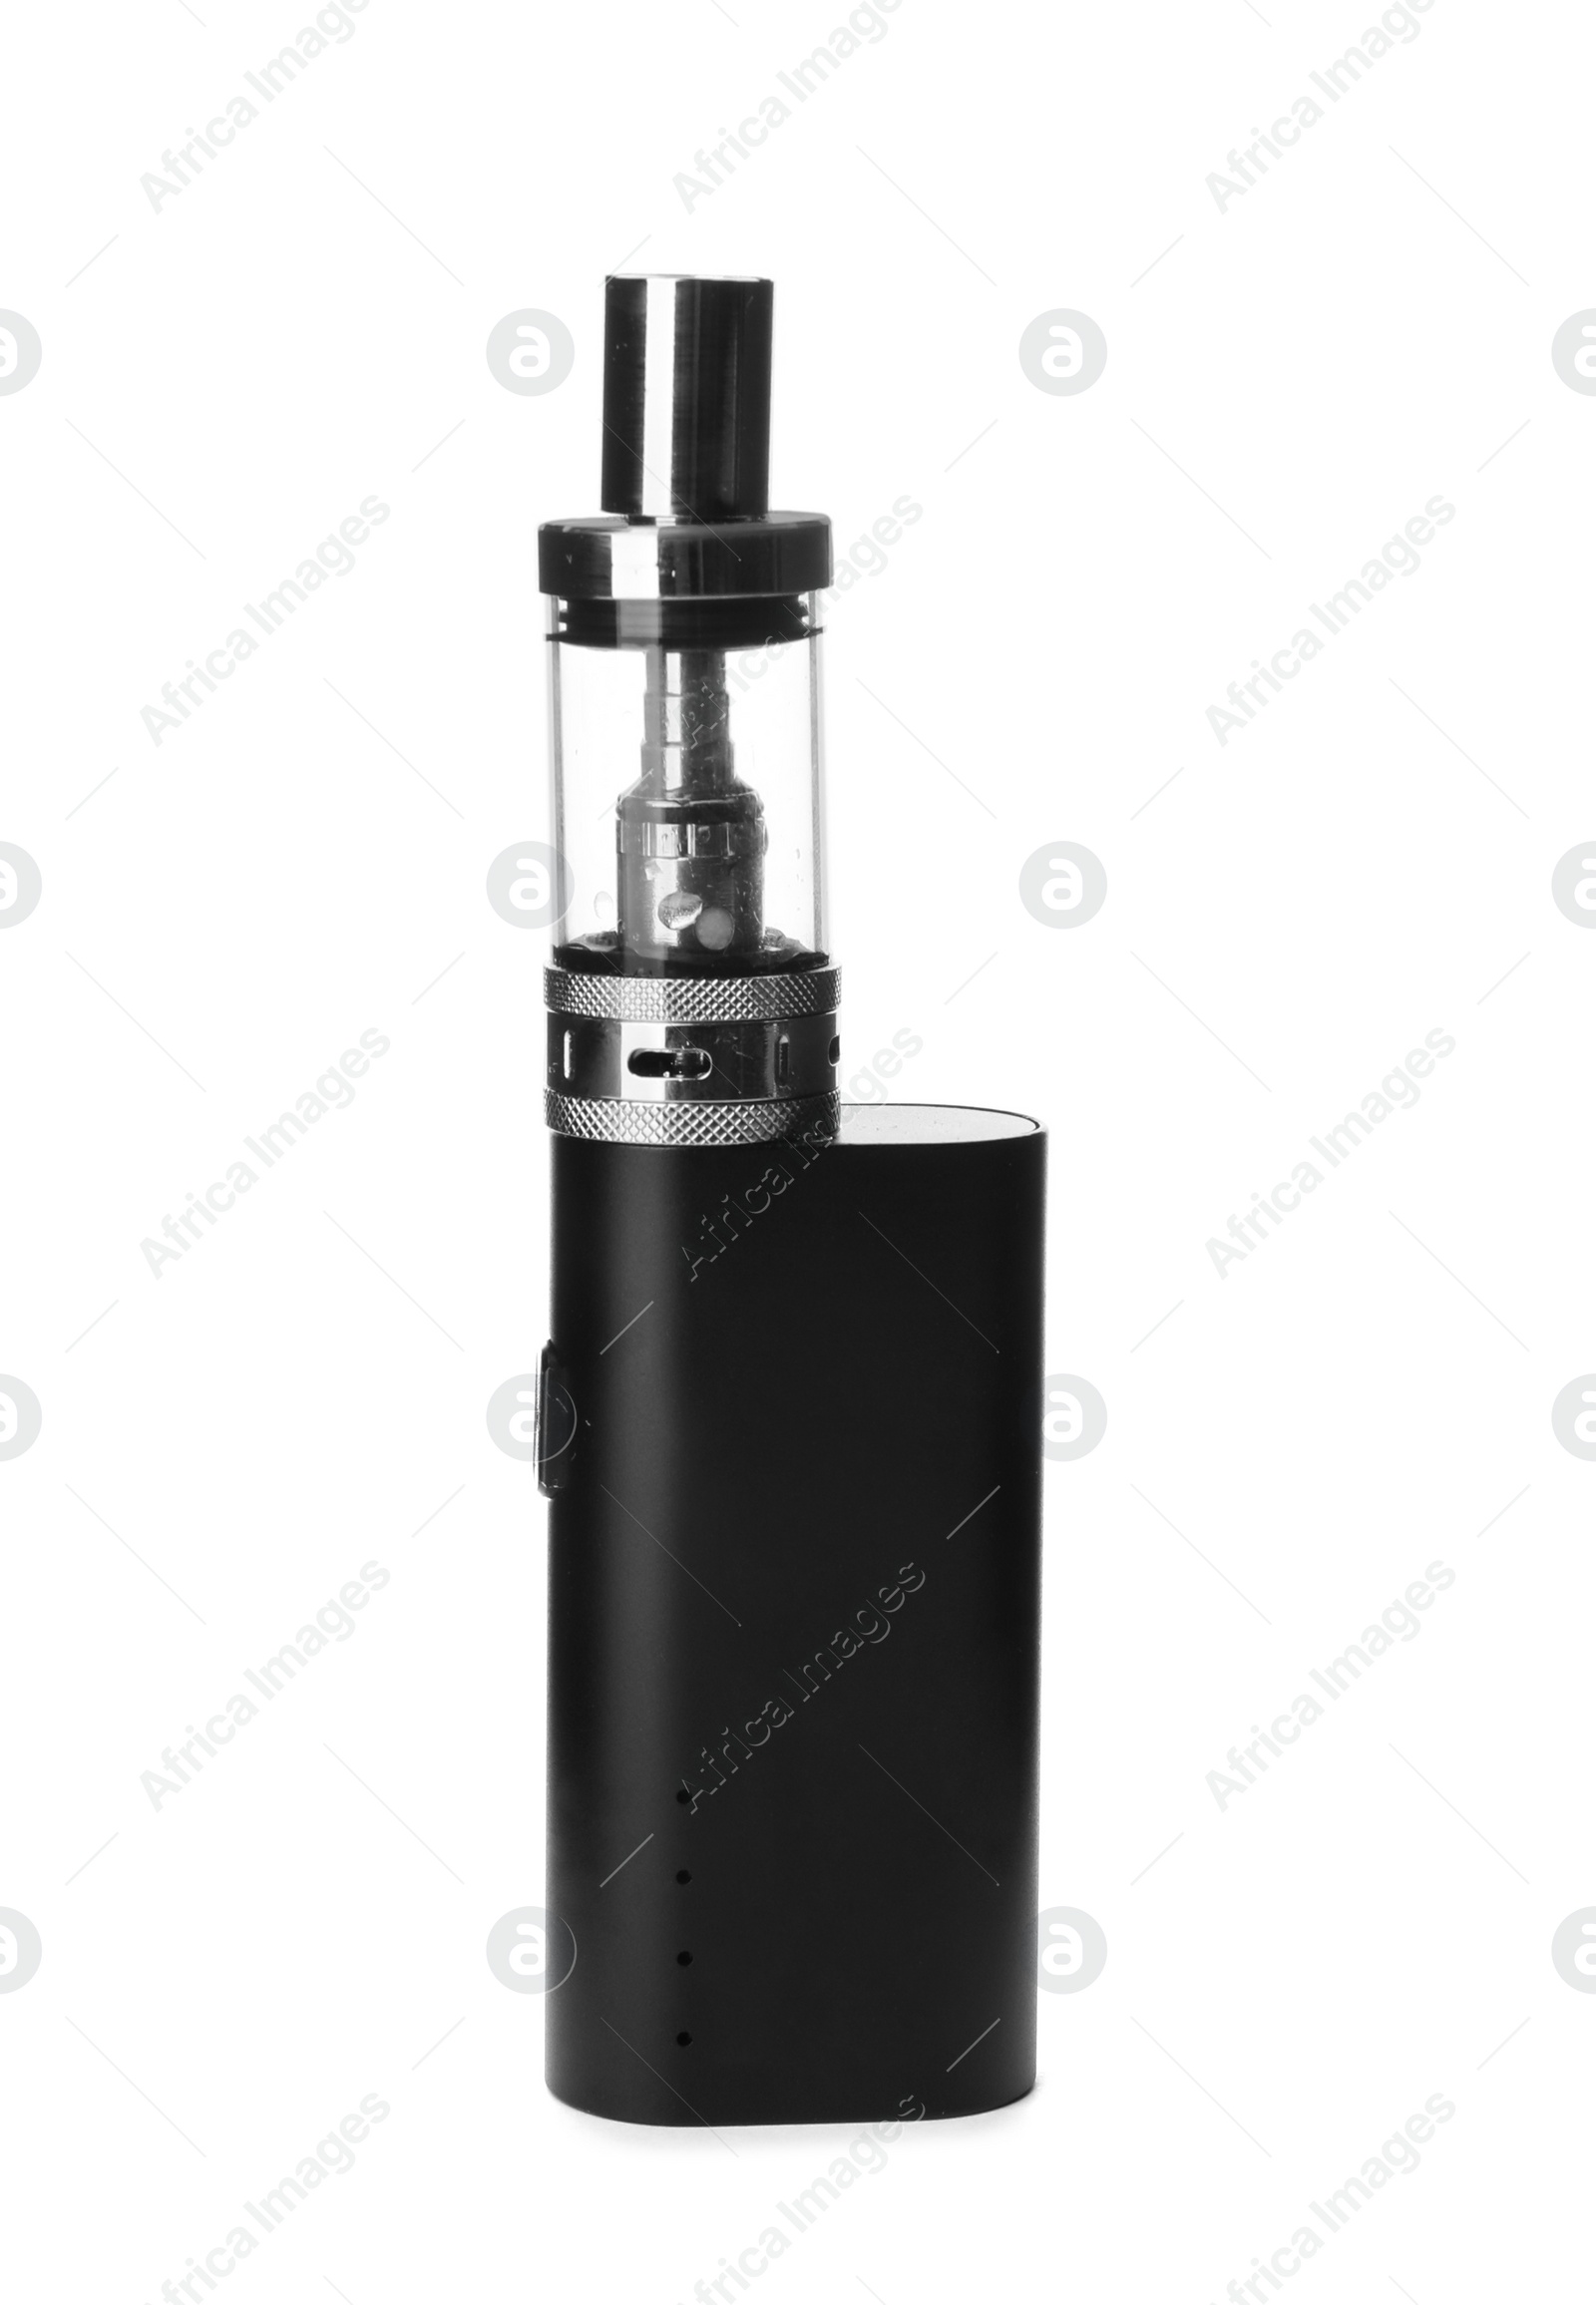 Photo of One electronic smoking device isolated on white